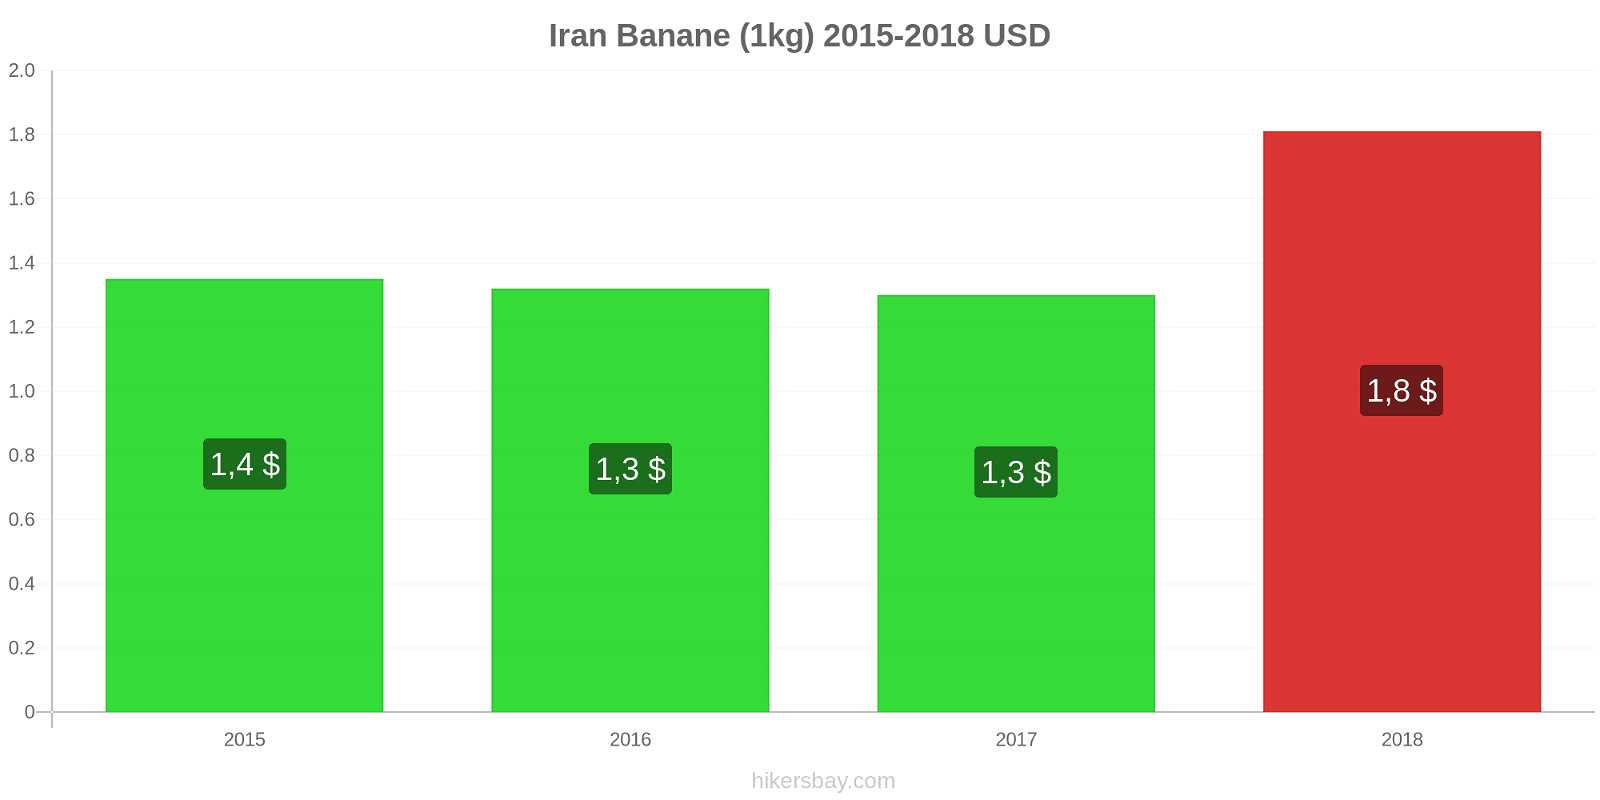 Iran Preisänderungen Bananen (1kg) hikersbay.com